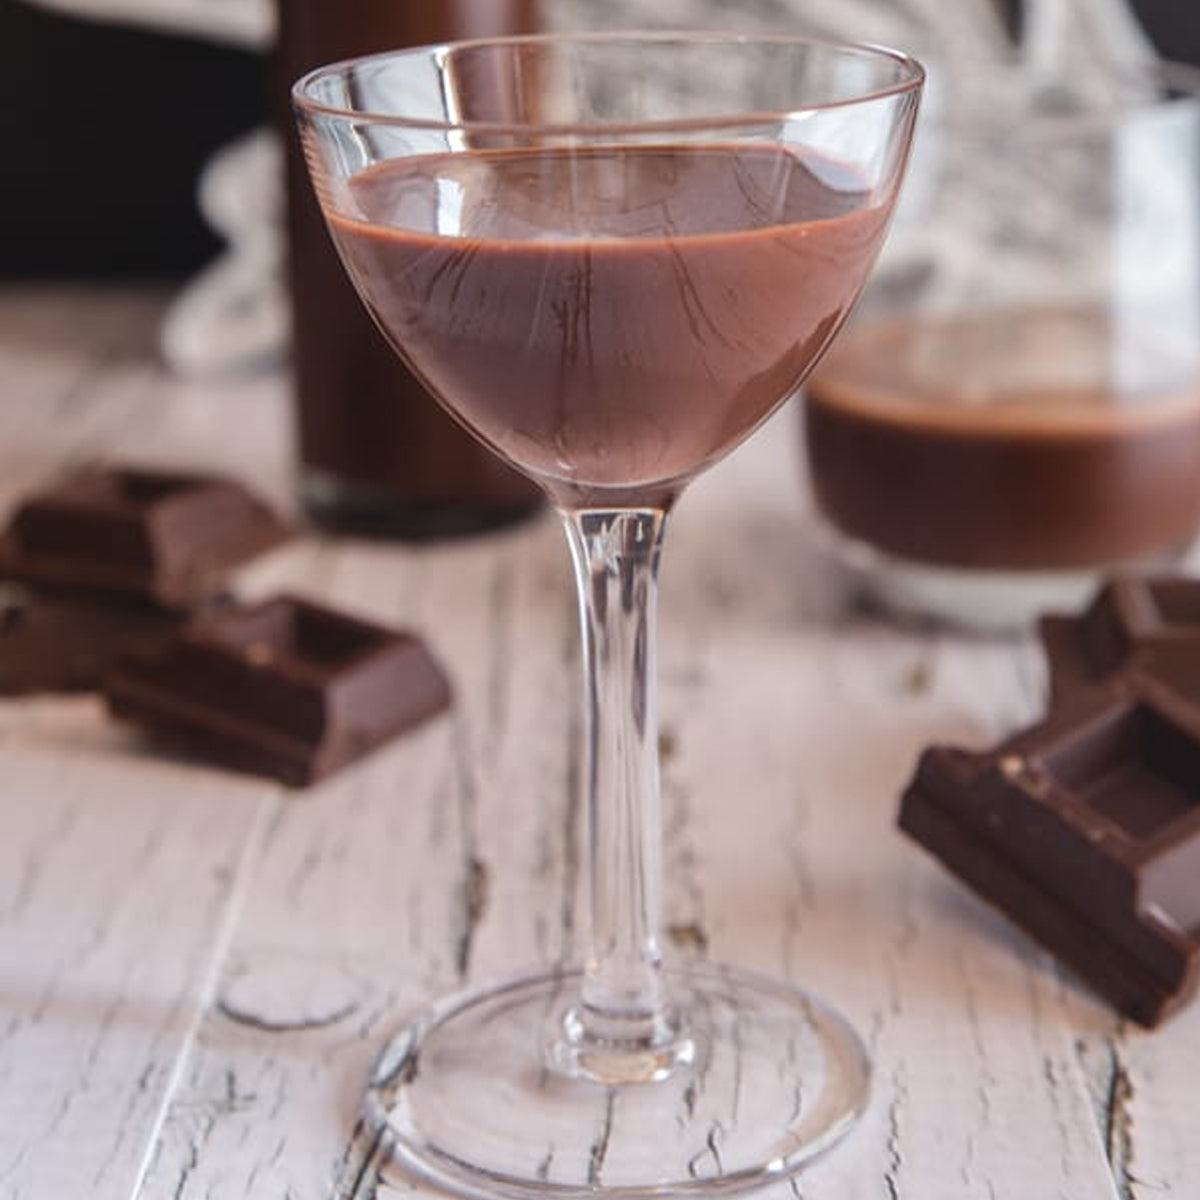 What is Chocolate Liquor? Guide to Chocolate Liquor vs Chocolate Liqueur